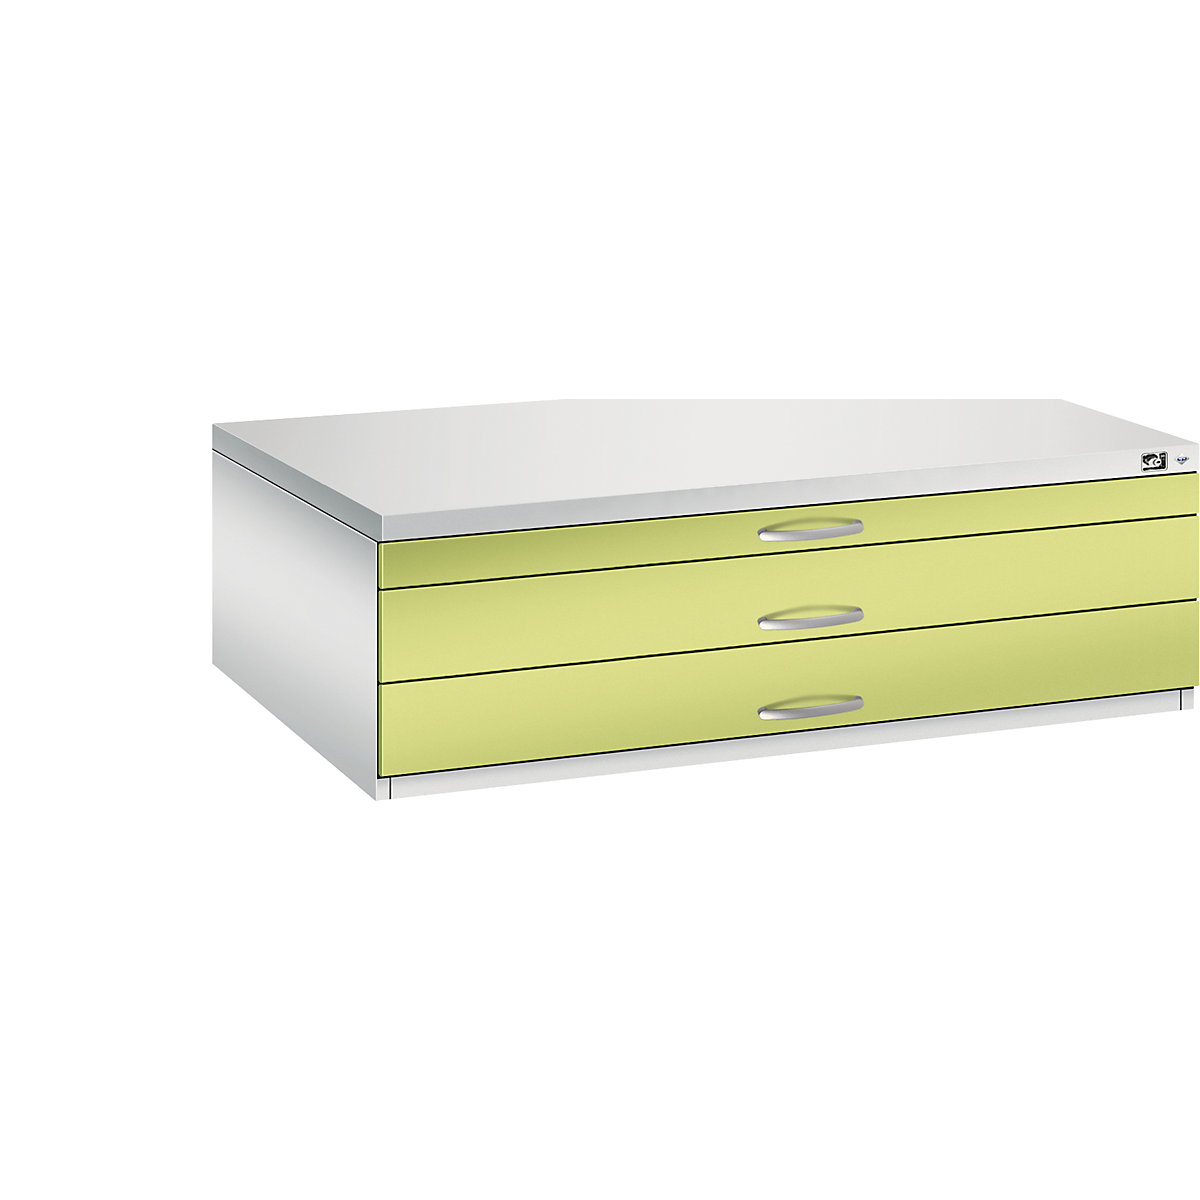 Omara za risbe – C+P, DIN A0, 3 predali, višina 420 mm, svetlo sive / rumeno zelene barve-11